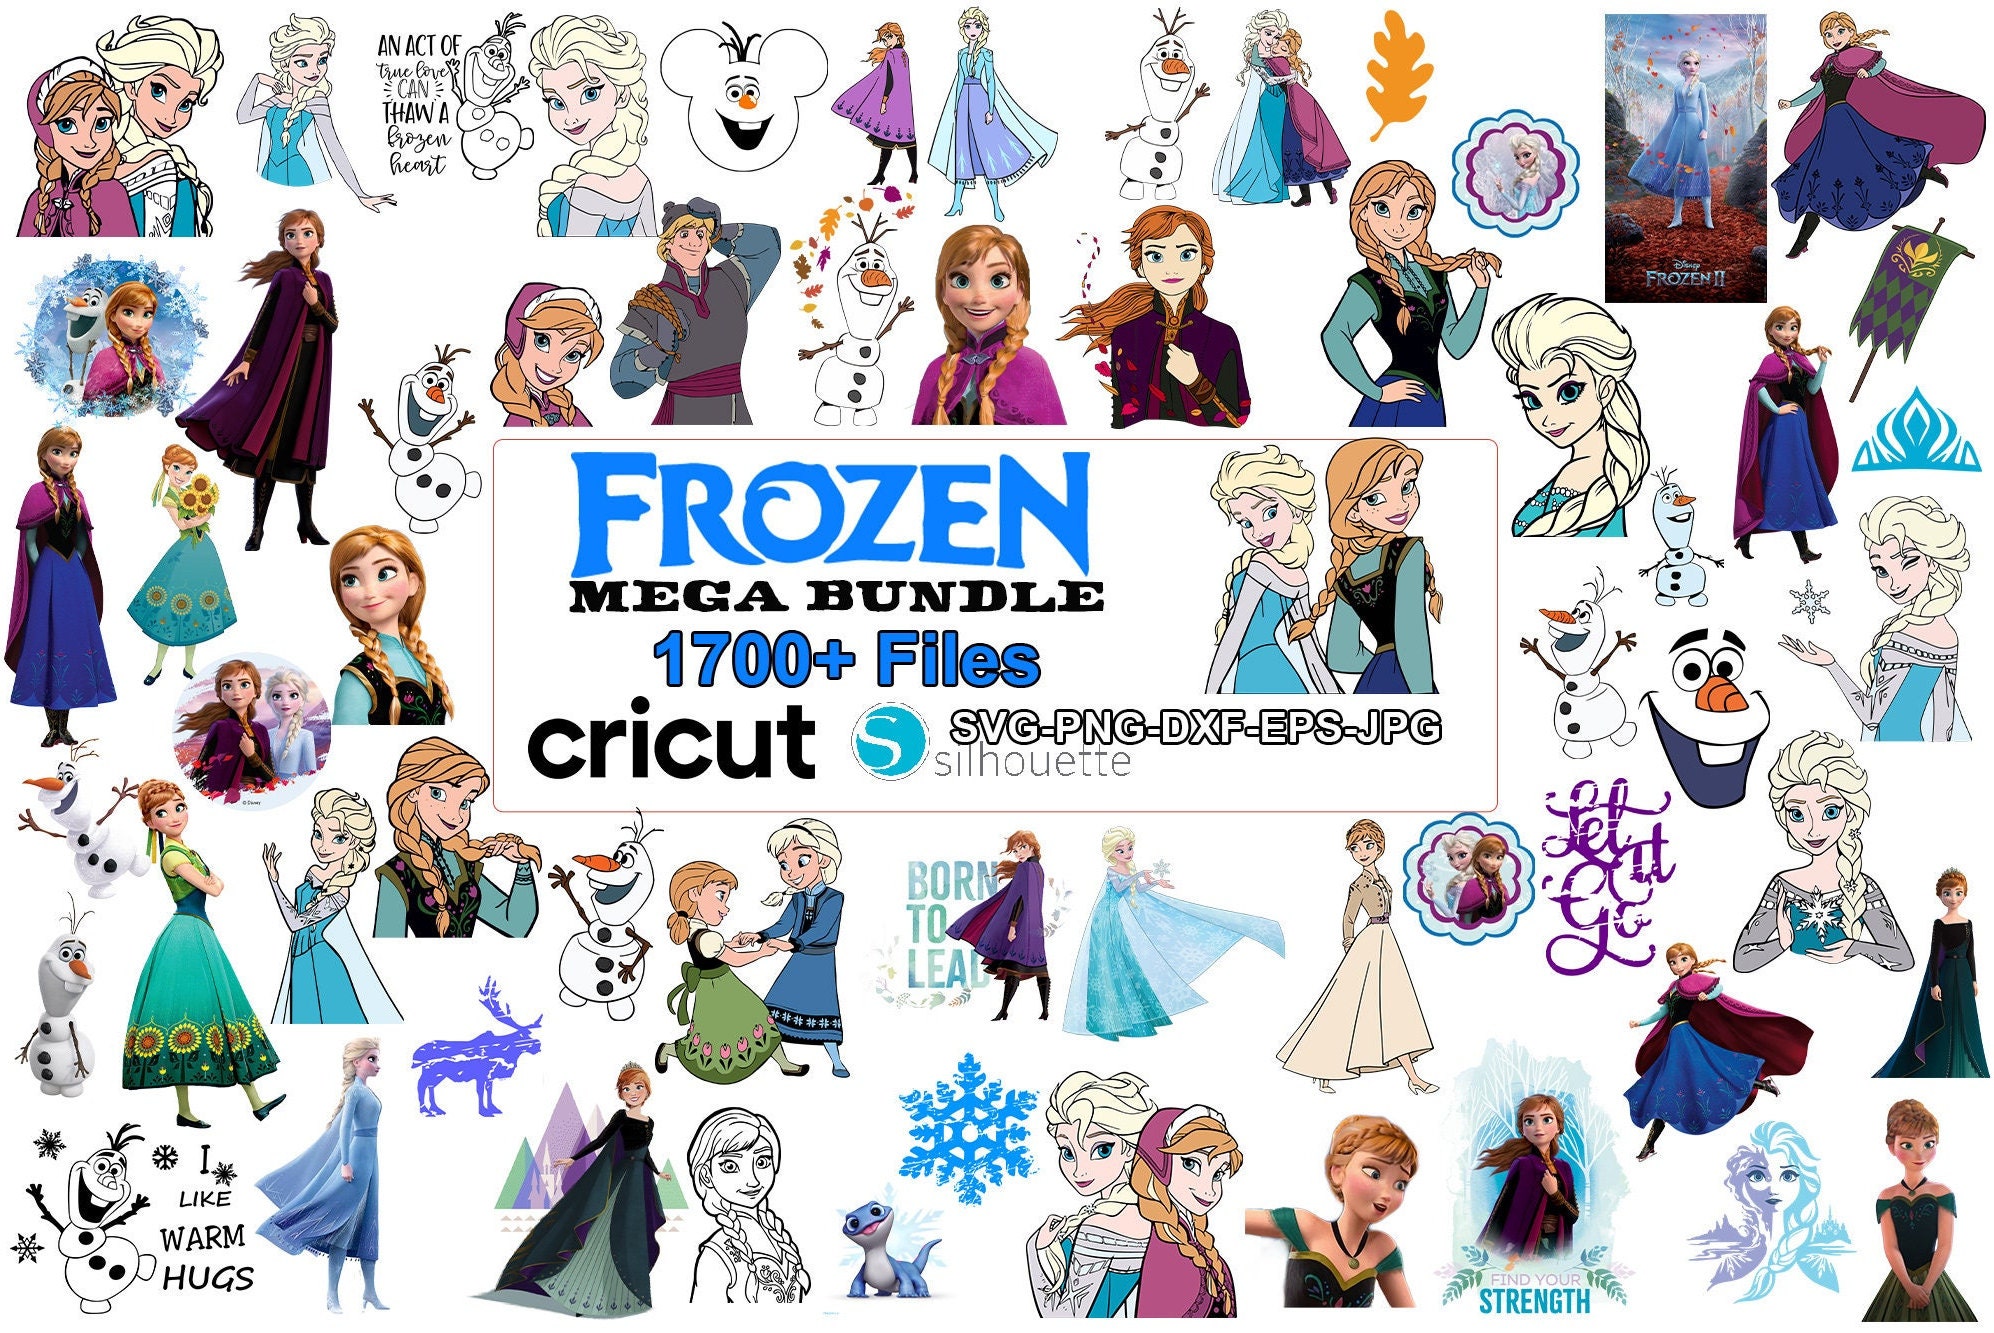 Walt Disney Studio Frozen Mini Backpack for Girls, Kids ~ 4 PC Bundle with 11in School Bag, 300 Stickers, Coloring Pages, Disney Frozen Backpack